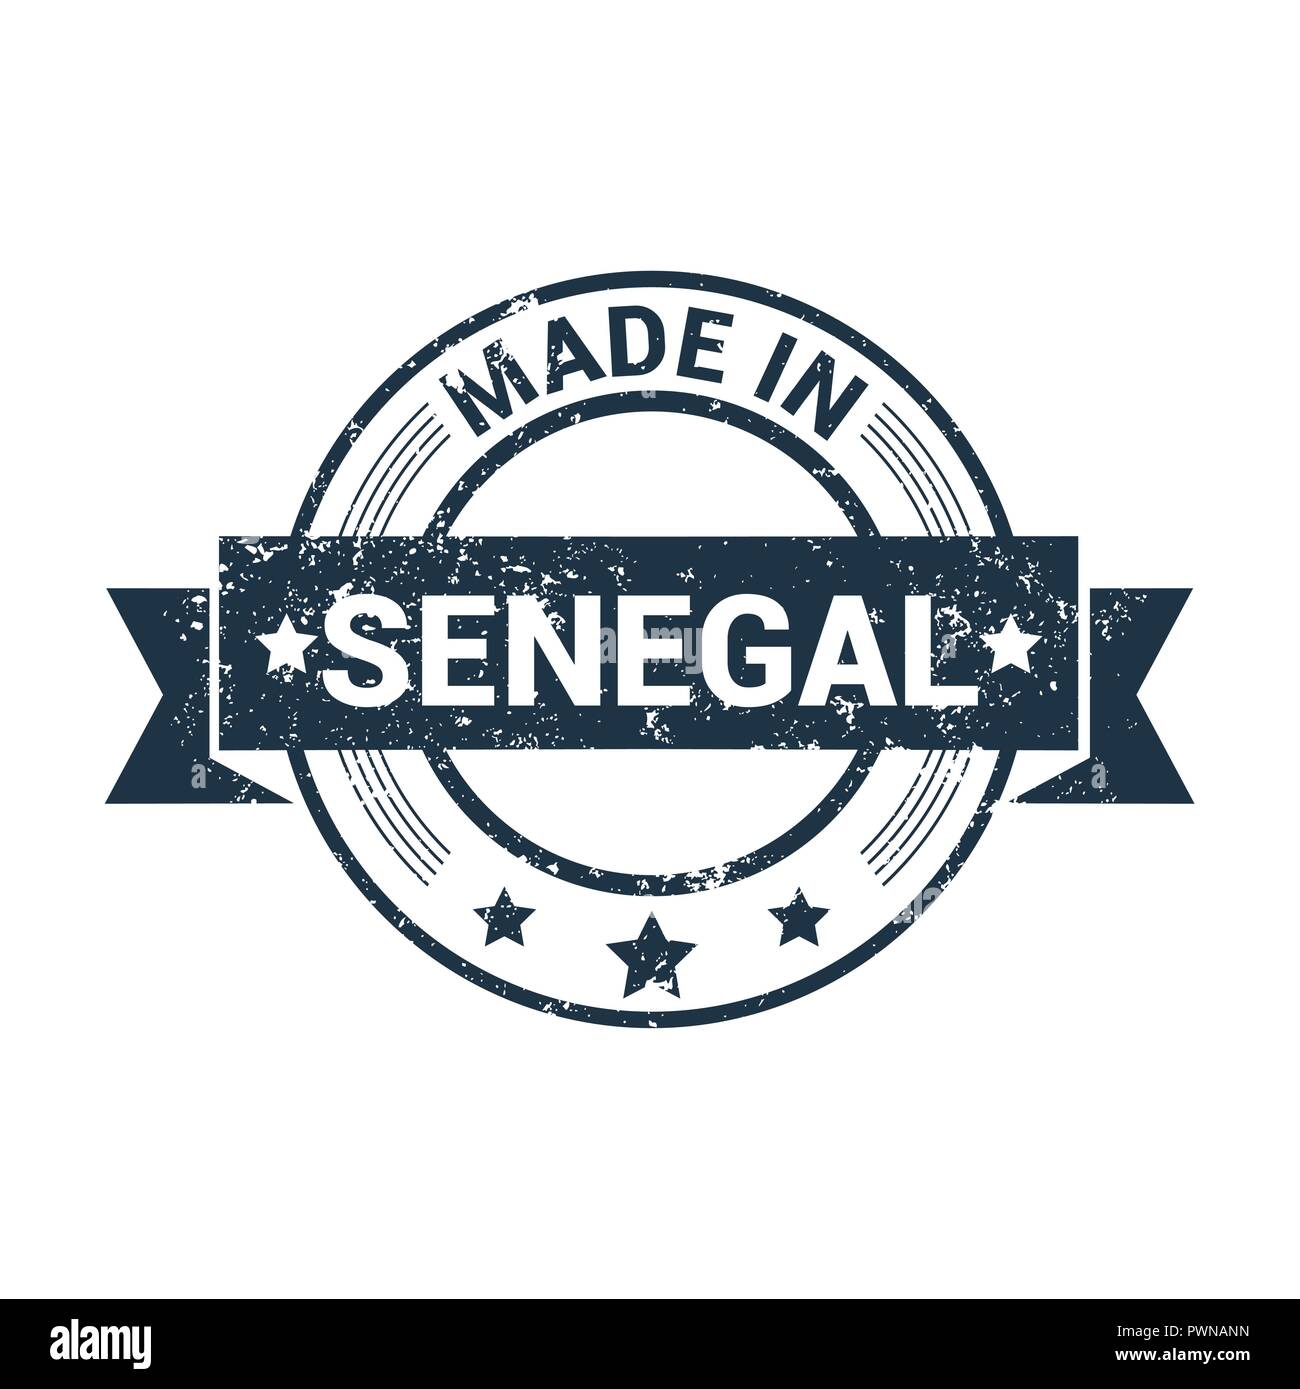 Senegal stamp design vector Stock Vector